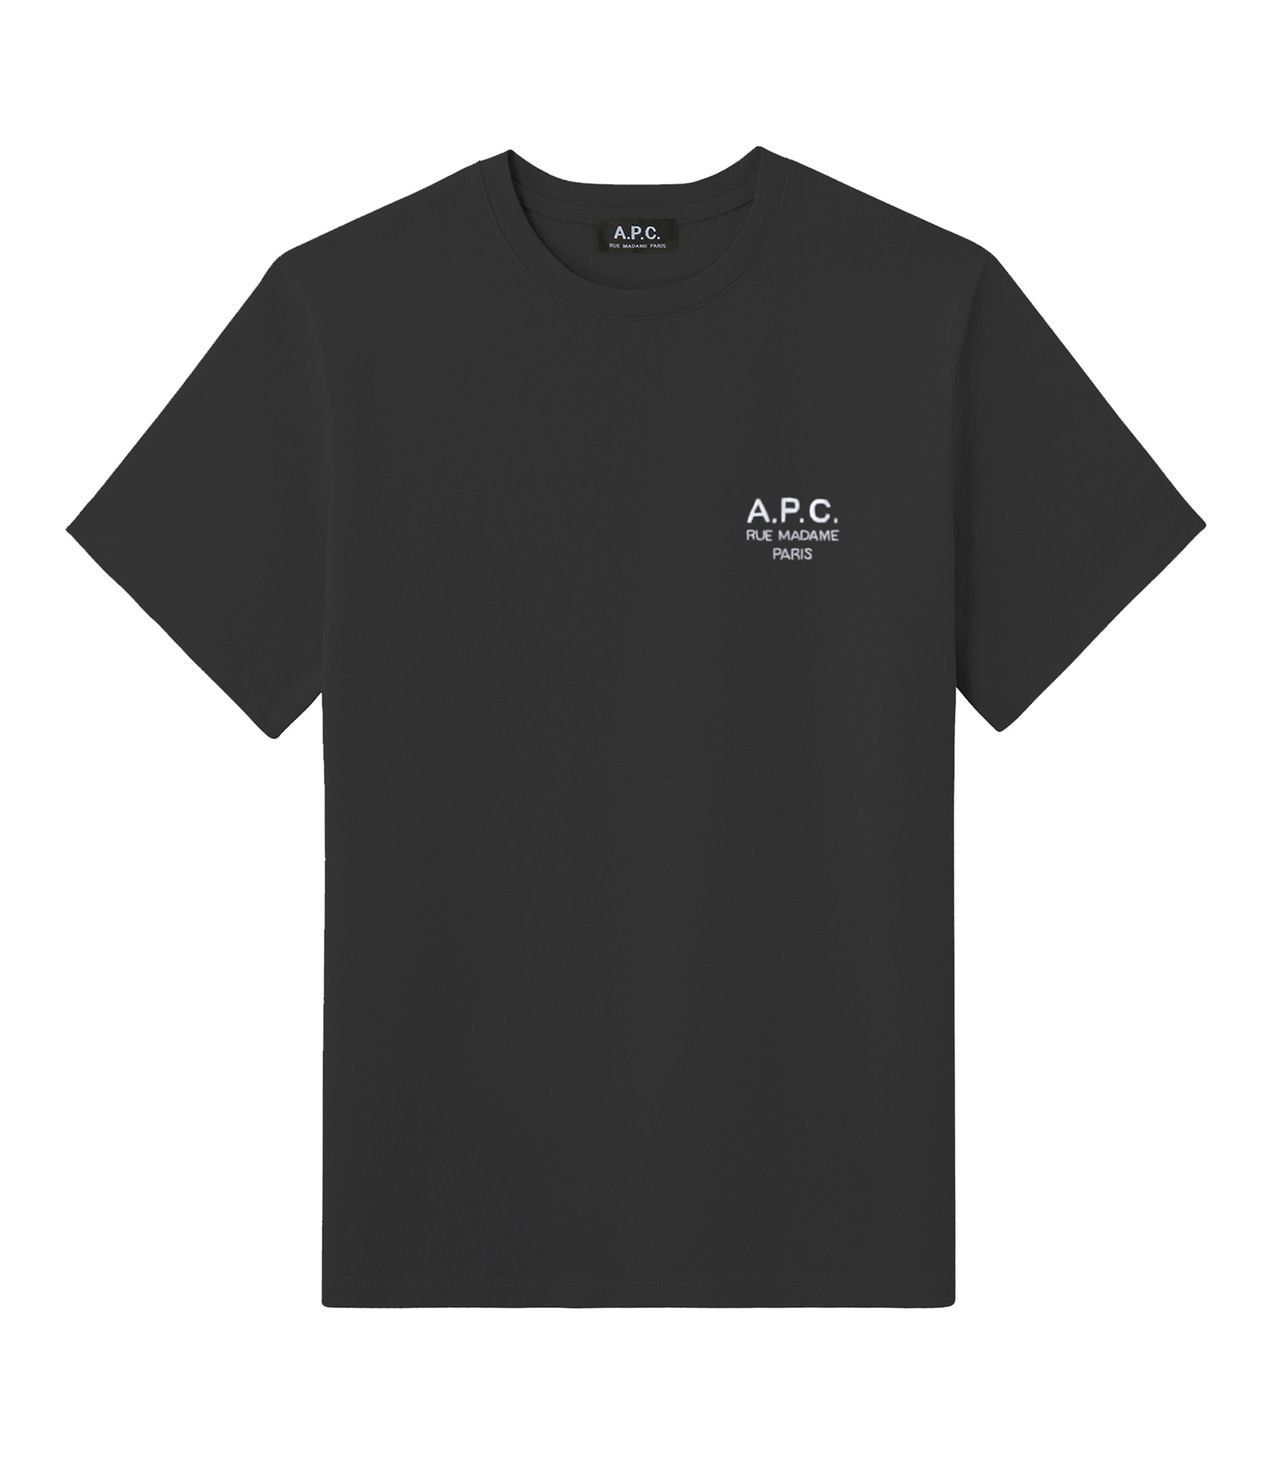 Denise T-shirt Charcoal grey APC